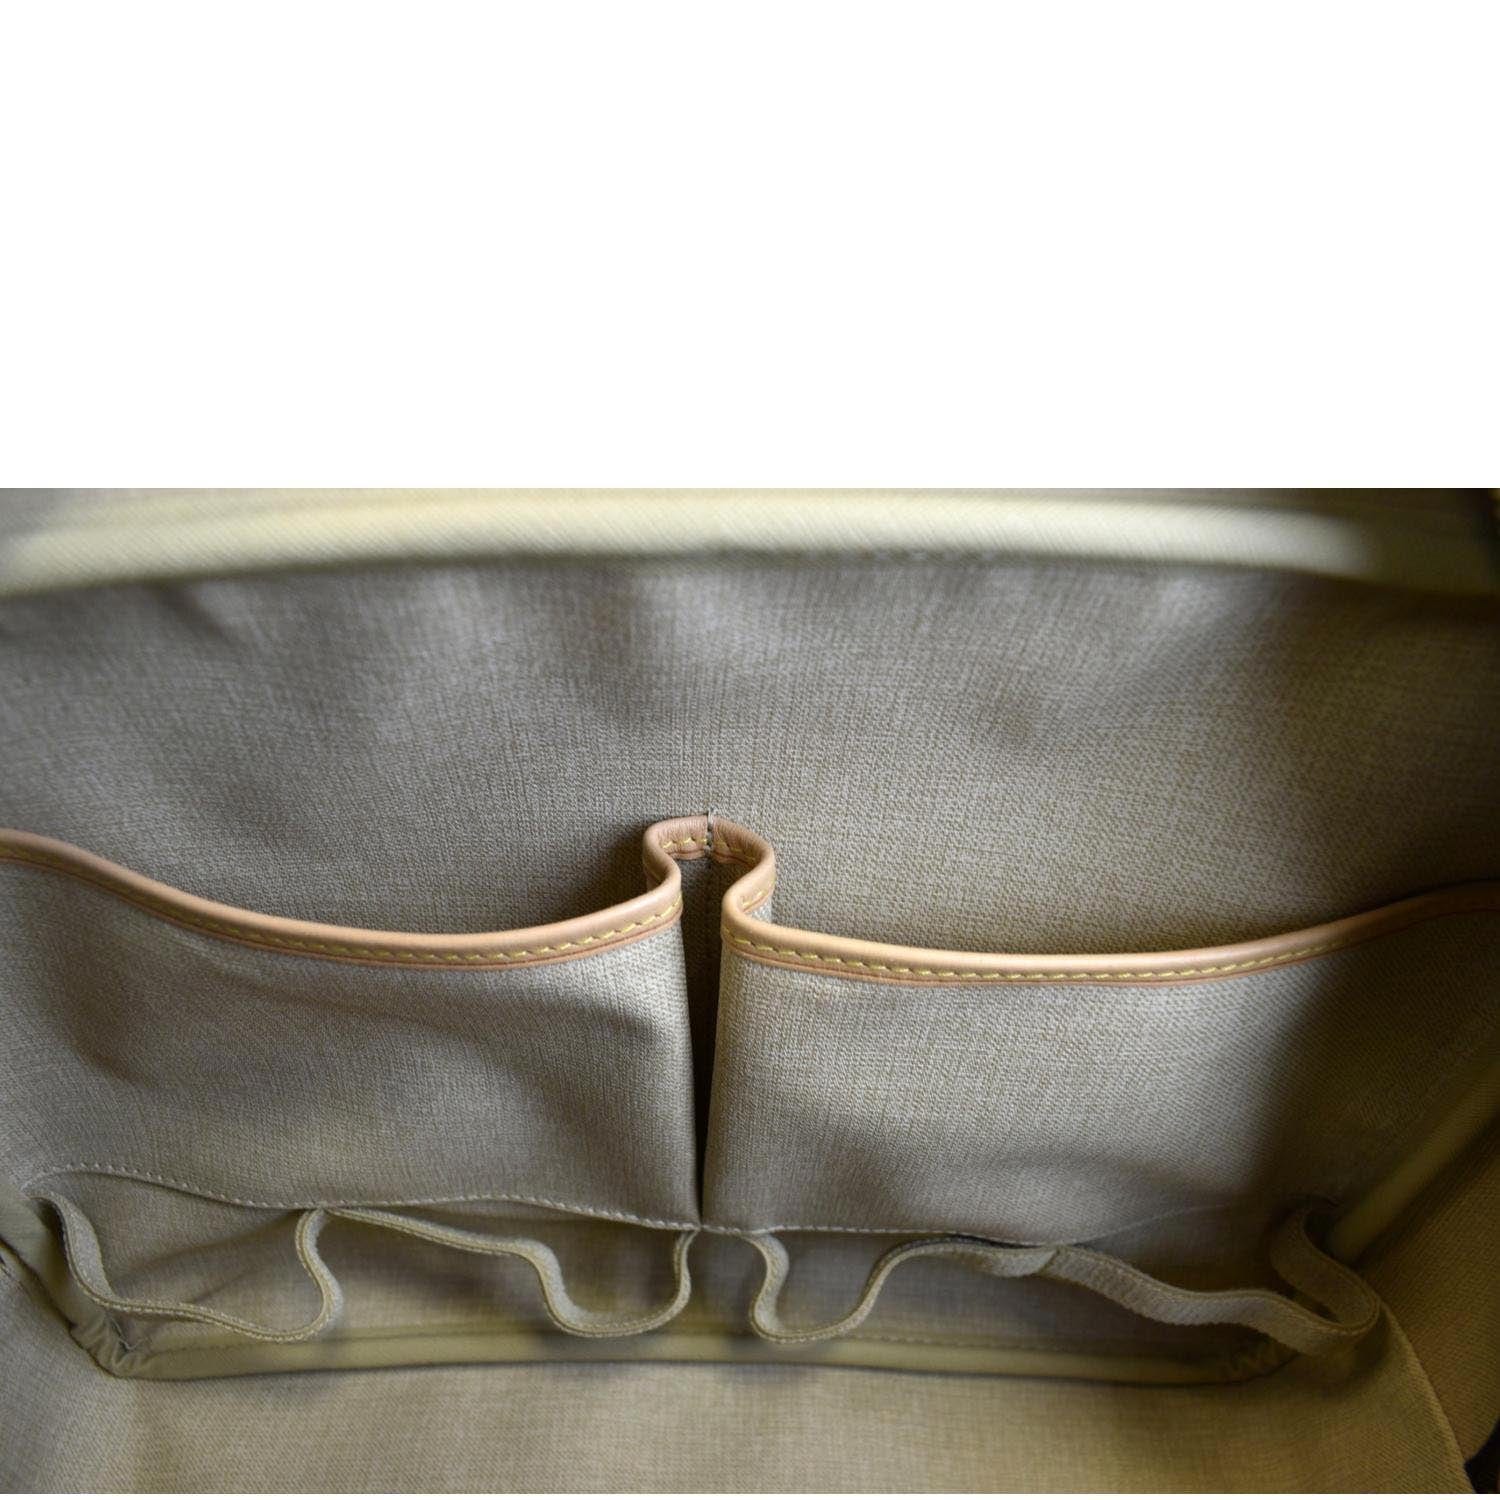 Louis Vuitton, Bags, Louis Vuitton Louis Vuitton Monogram Bowling Vanity  Deauville Handbag M4727